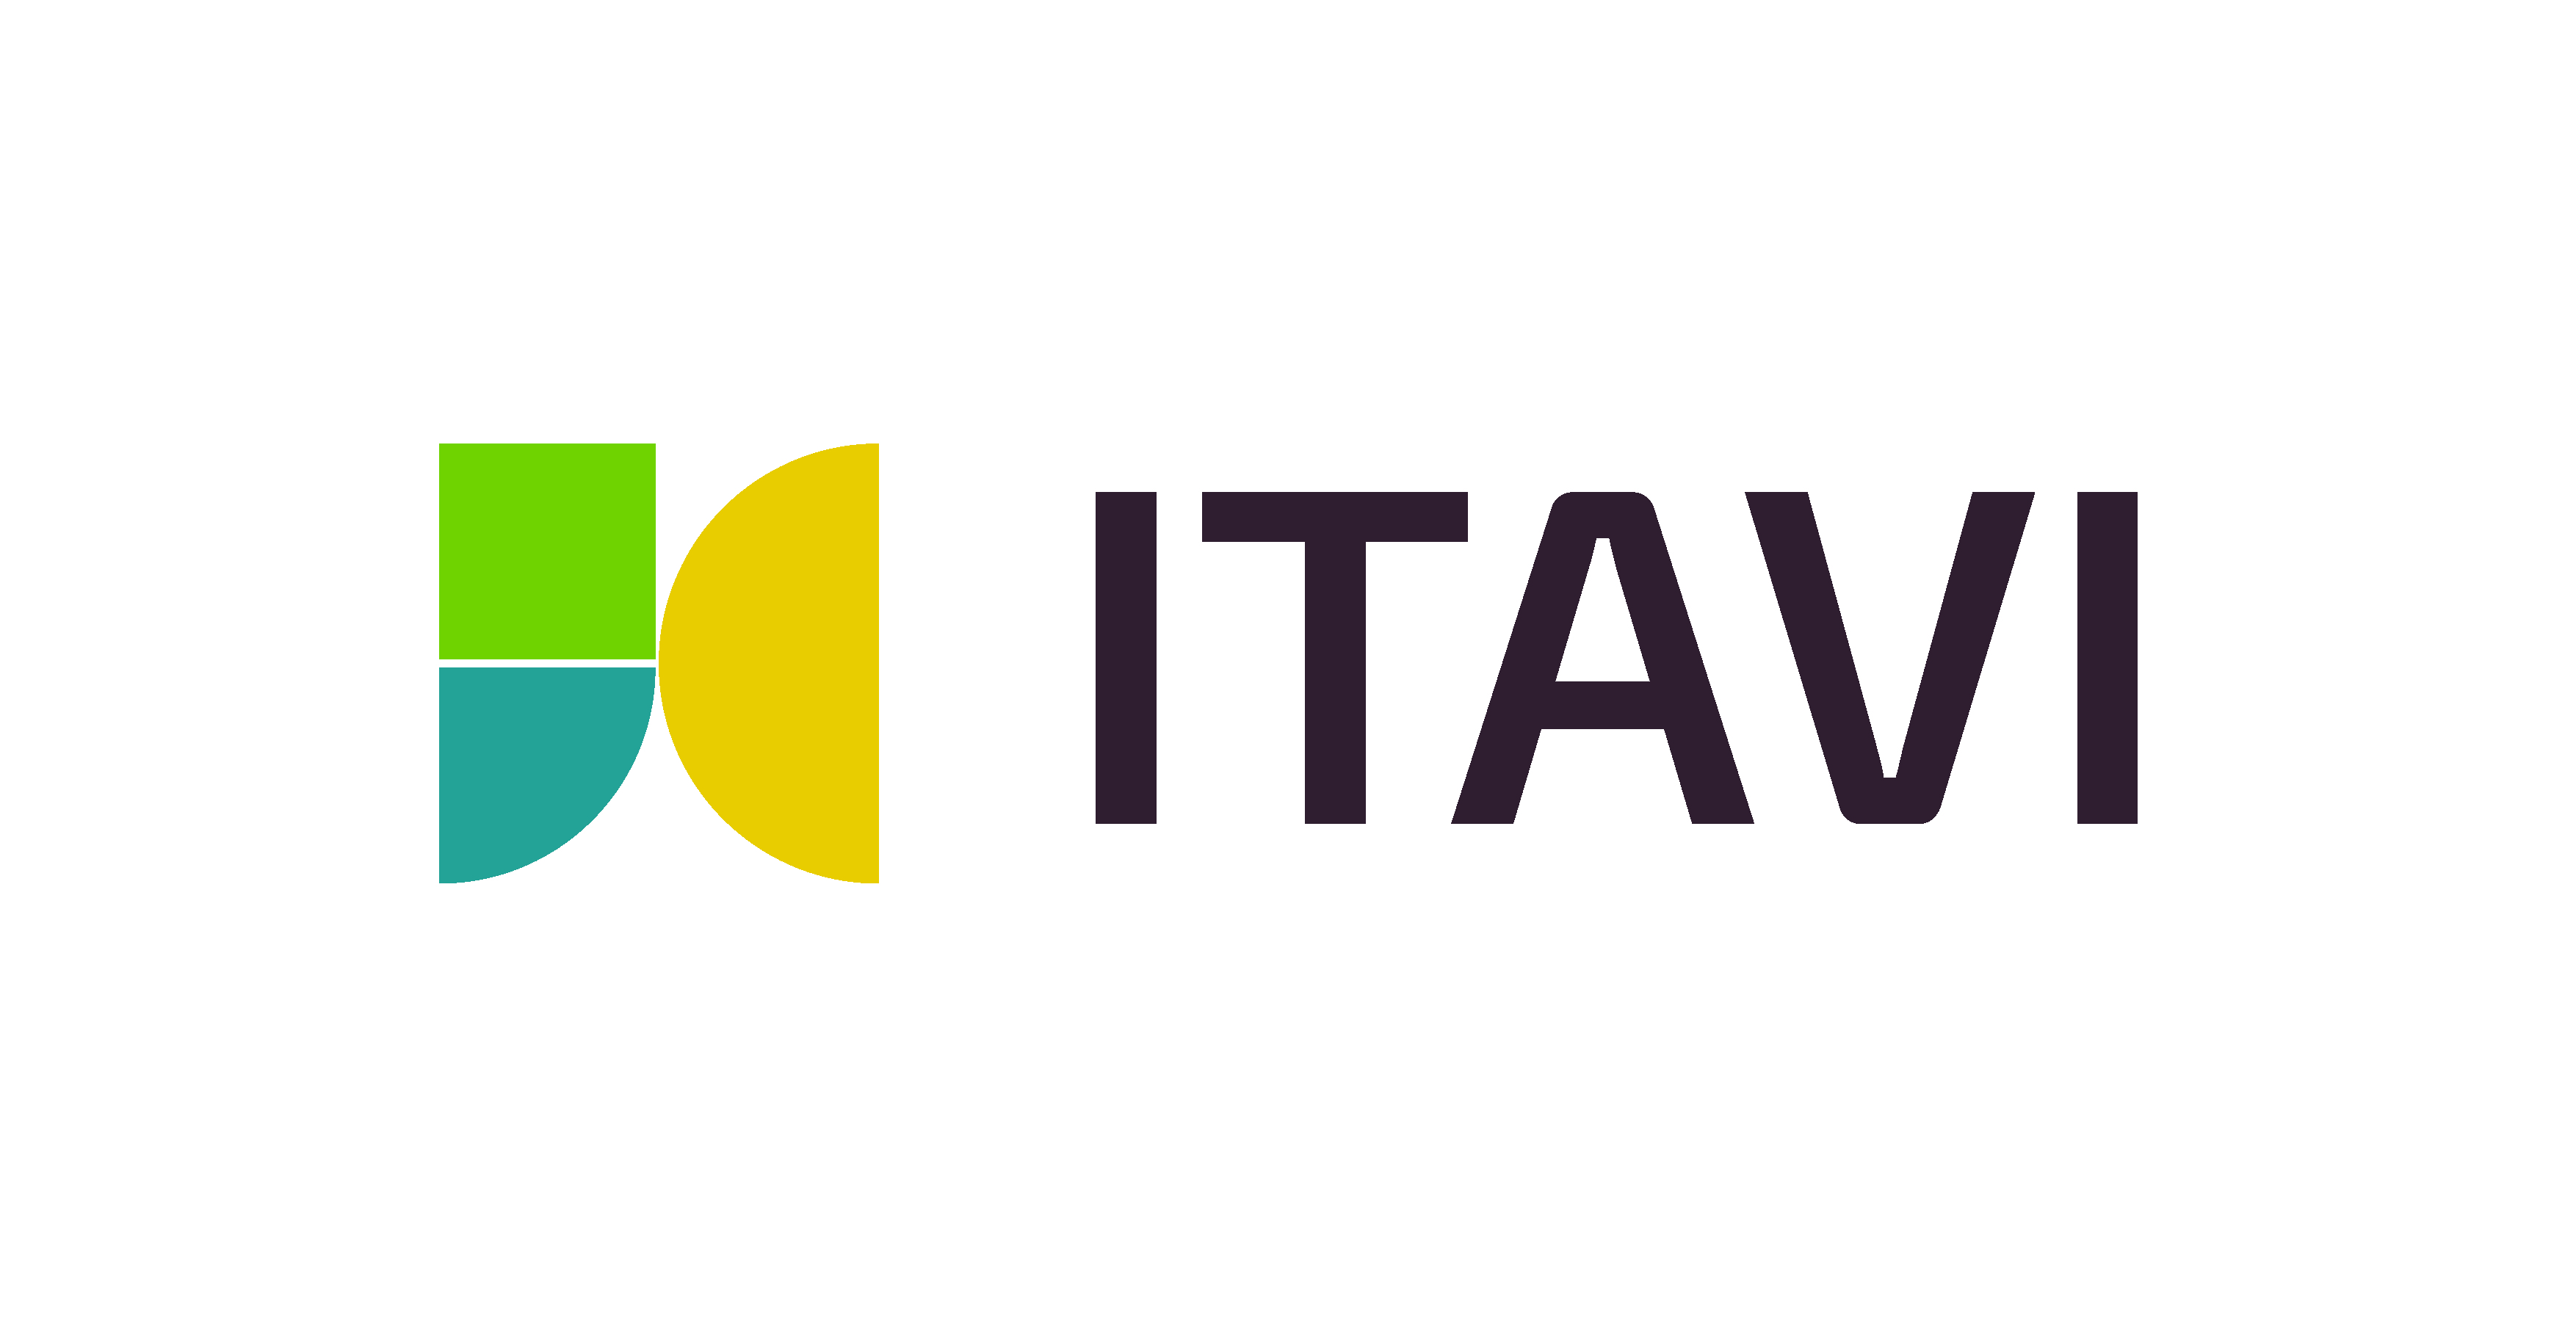 logo-itavi